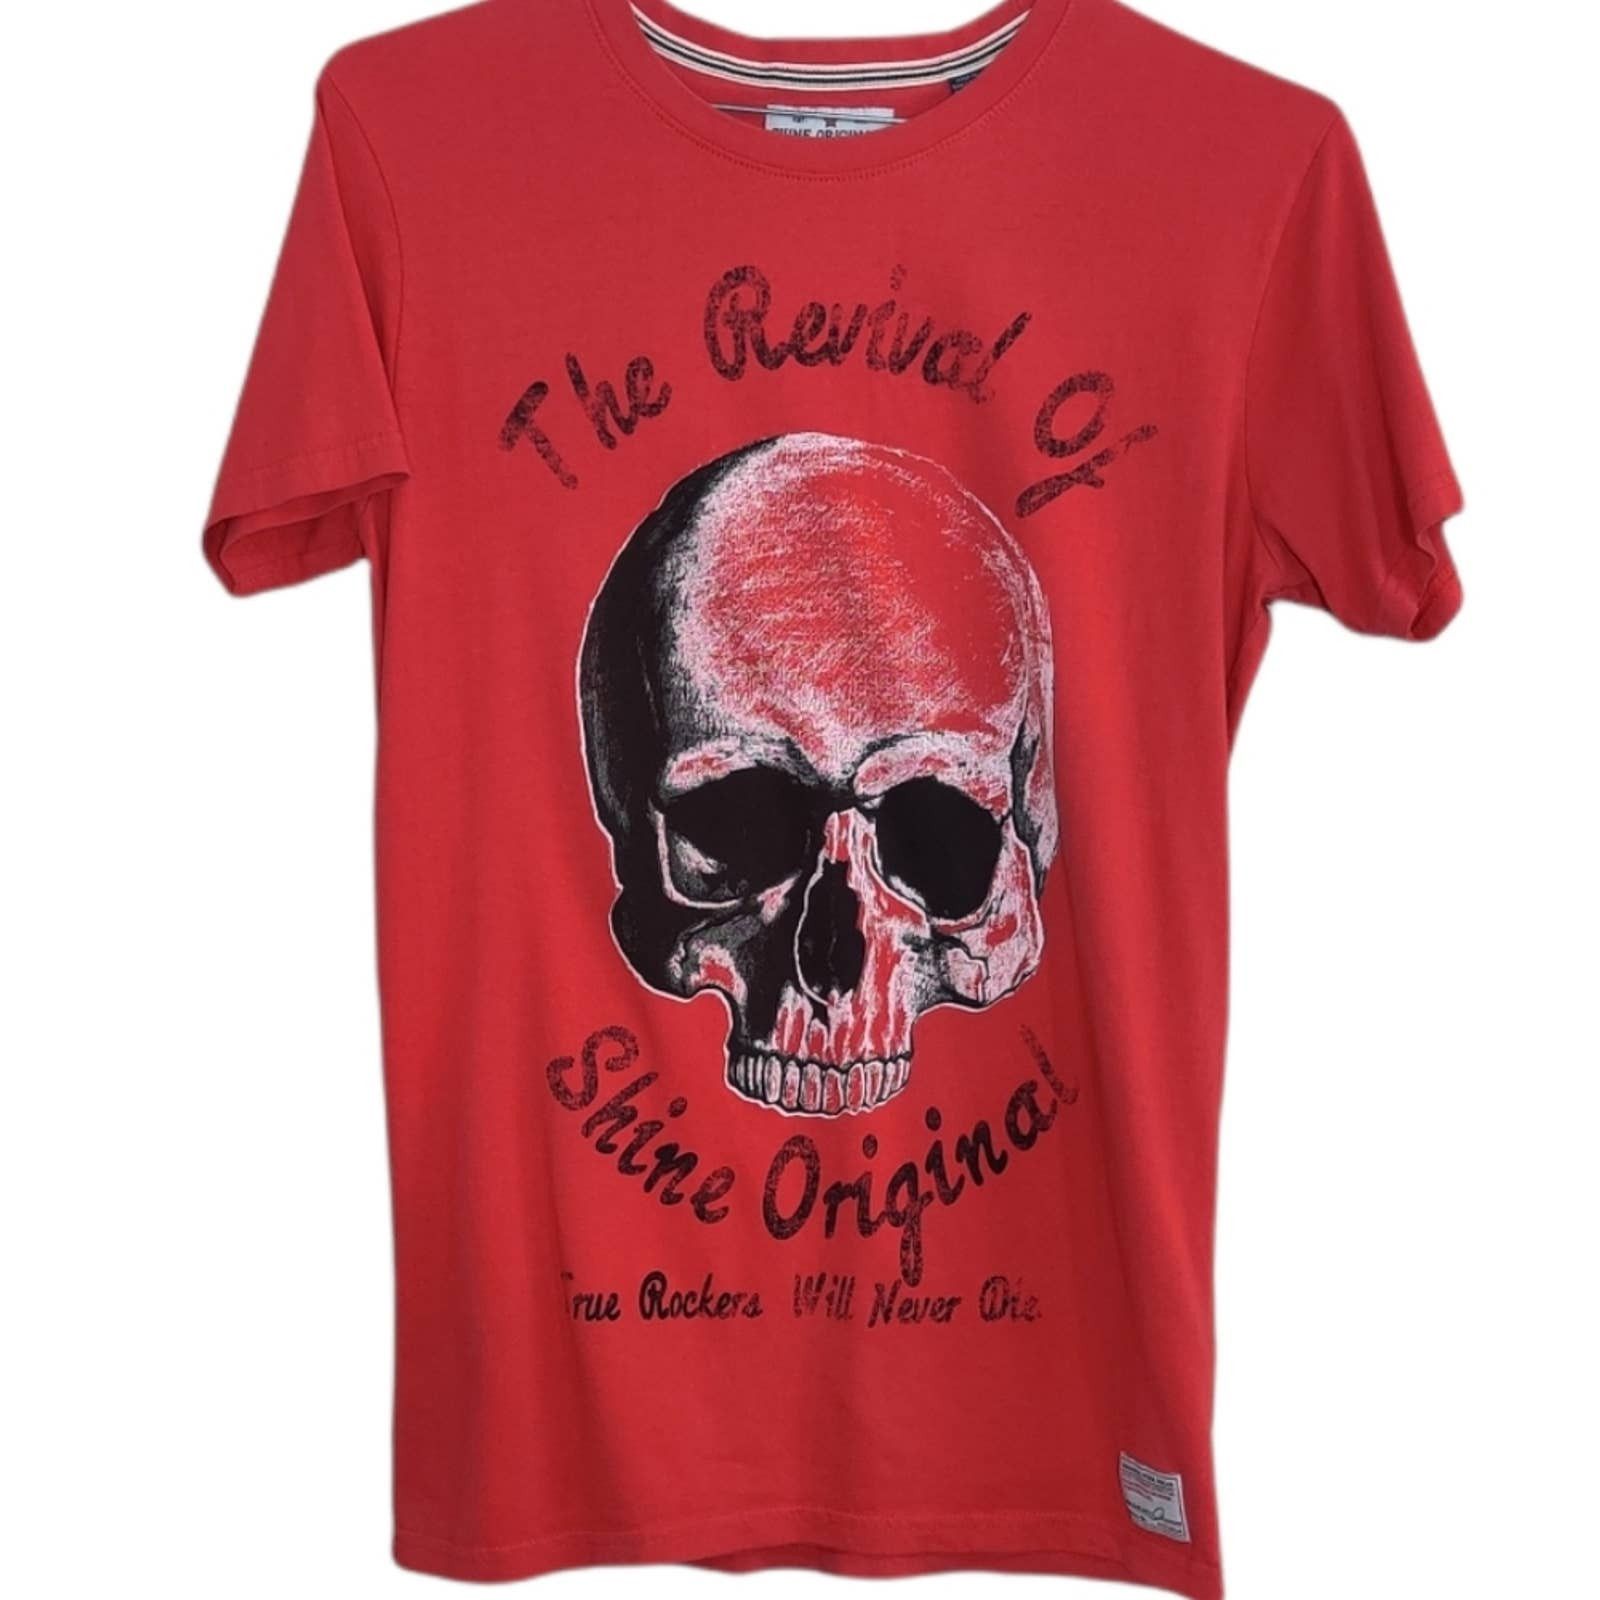 Shine Original Shine Original Red Skull True Rockers Will Never Die T ...